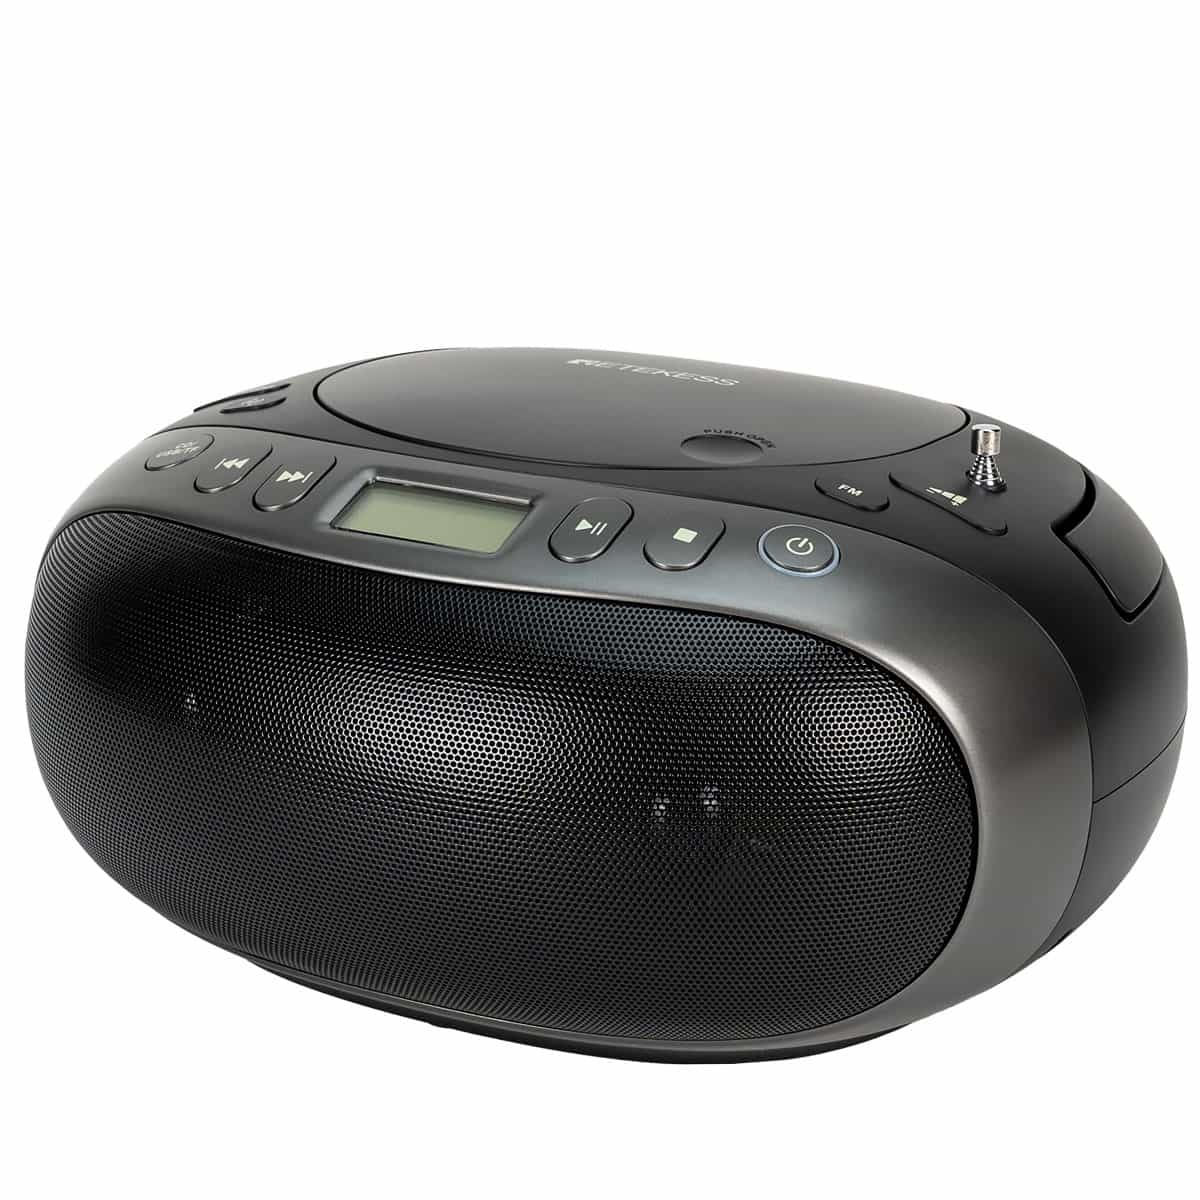 Retekess TR631 Stereo FM Radio Portable CD player, Receive DAB Station,  Support USB, CD, AUX, European Version